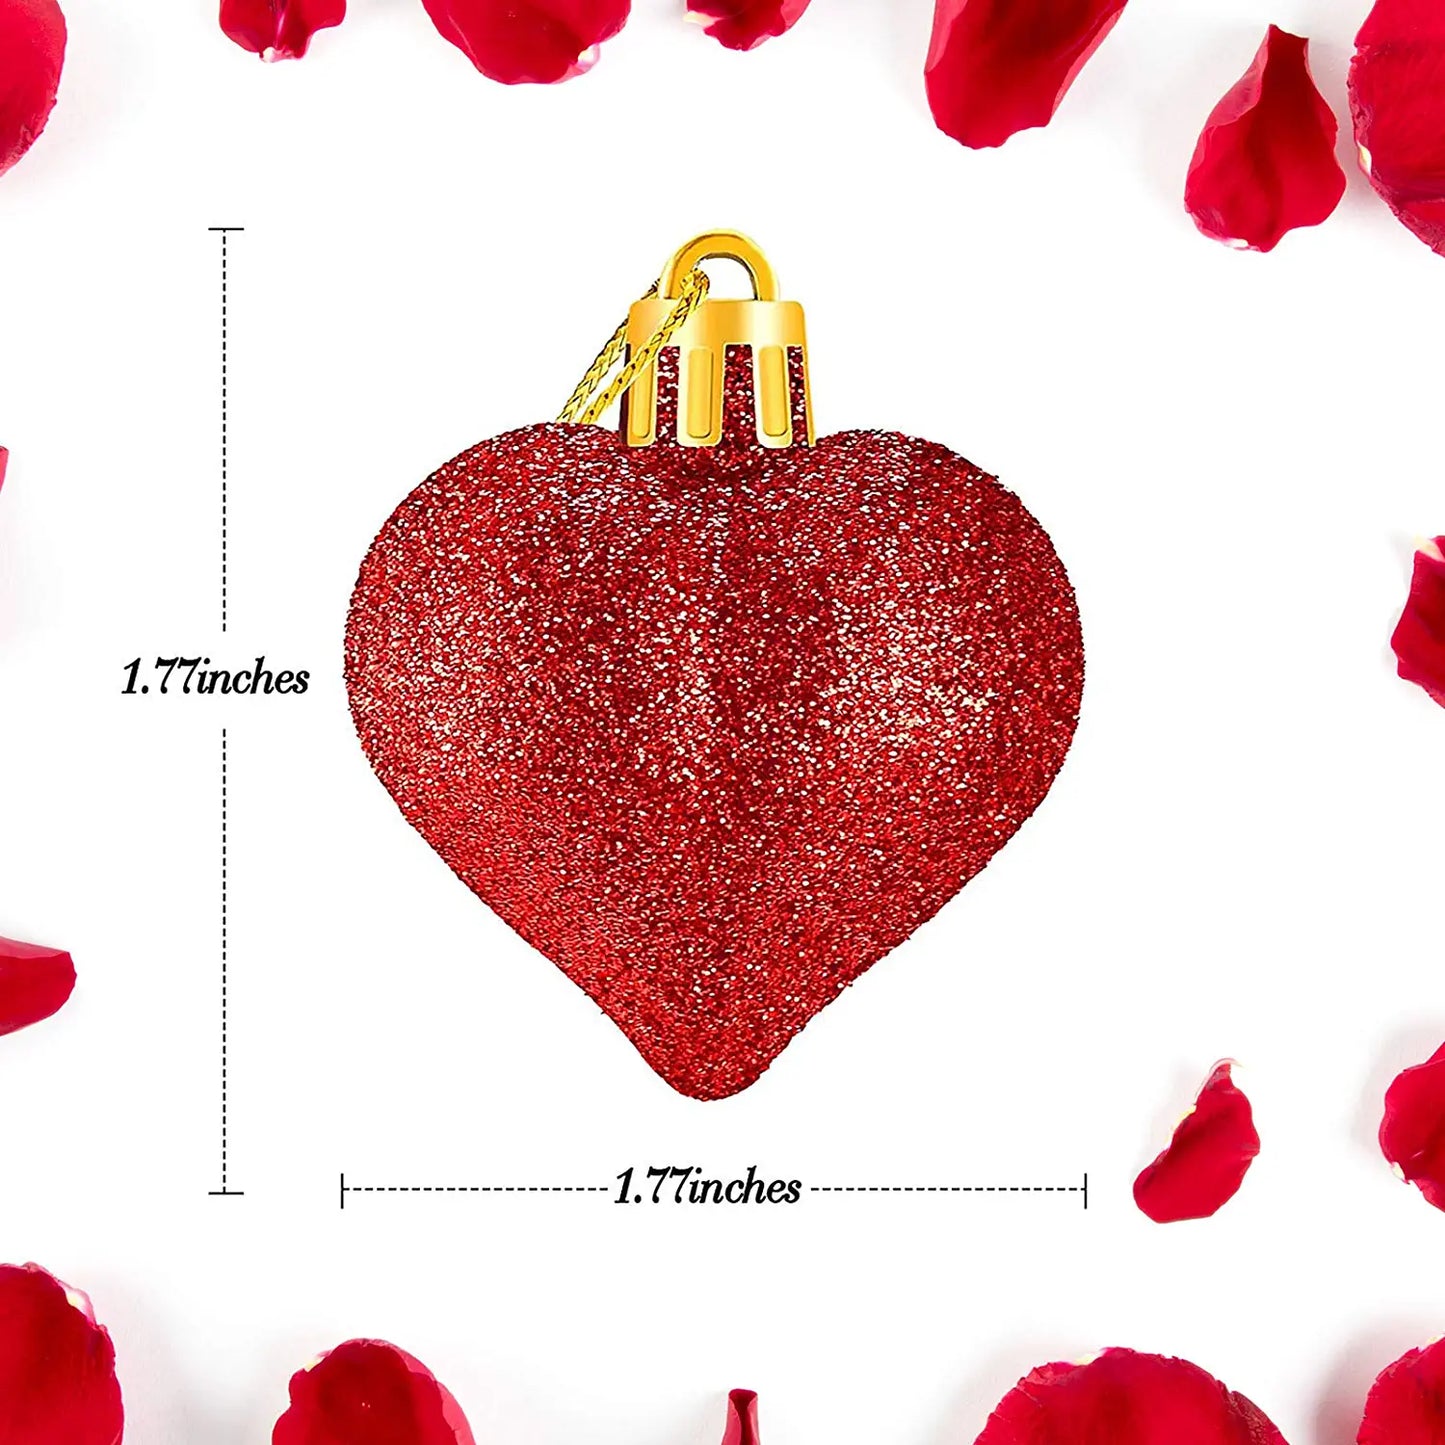 Emopeak - Romantic heart Valentine's Day tree ornaments, 24 heart balls for Valentine's Day, 2 styles (shiny, glitter) 3 colors